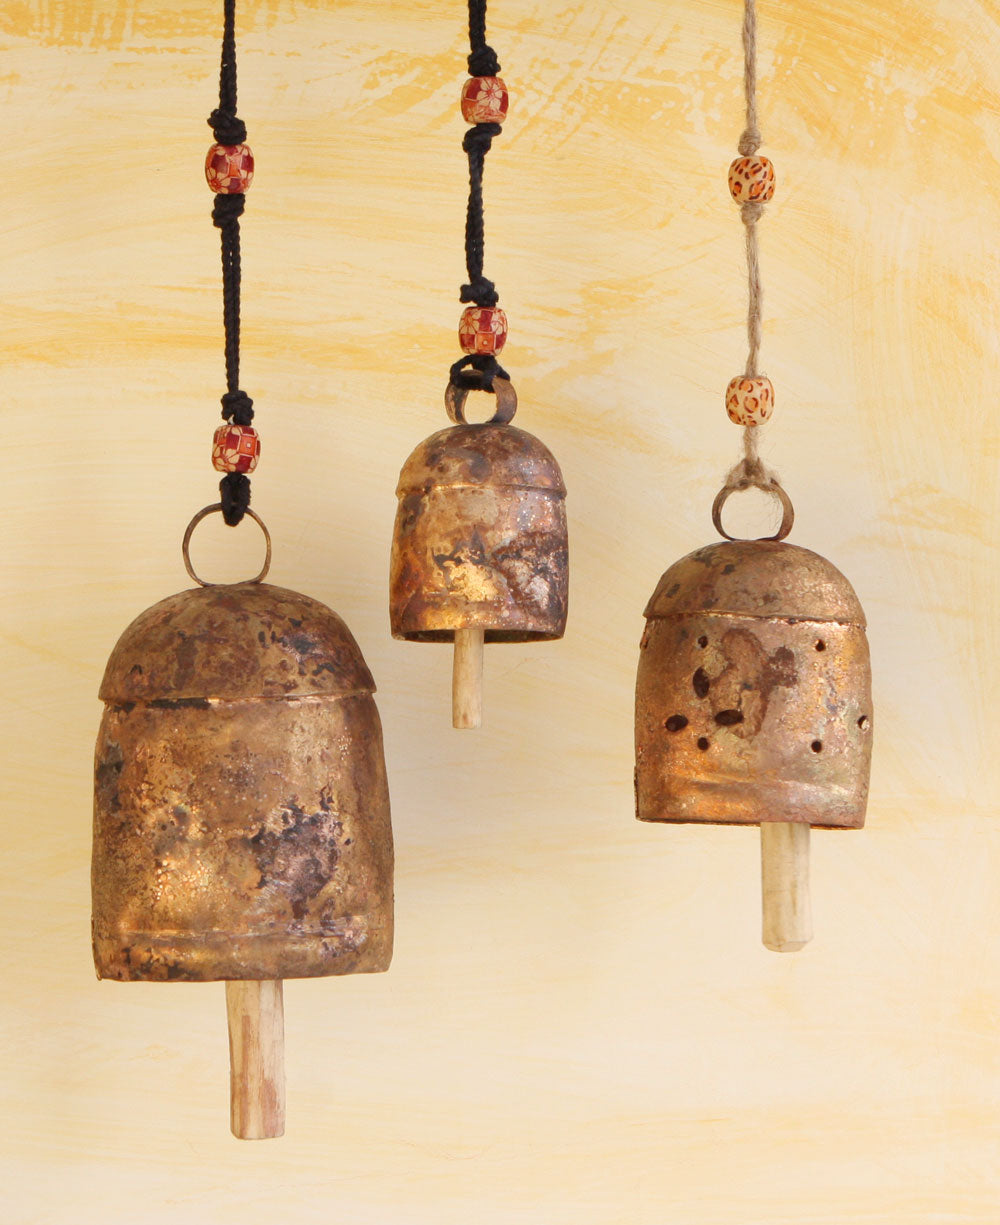 India Arts Bell Chimes - The Backyard Naturalist